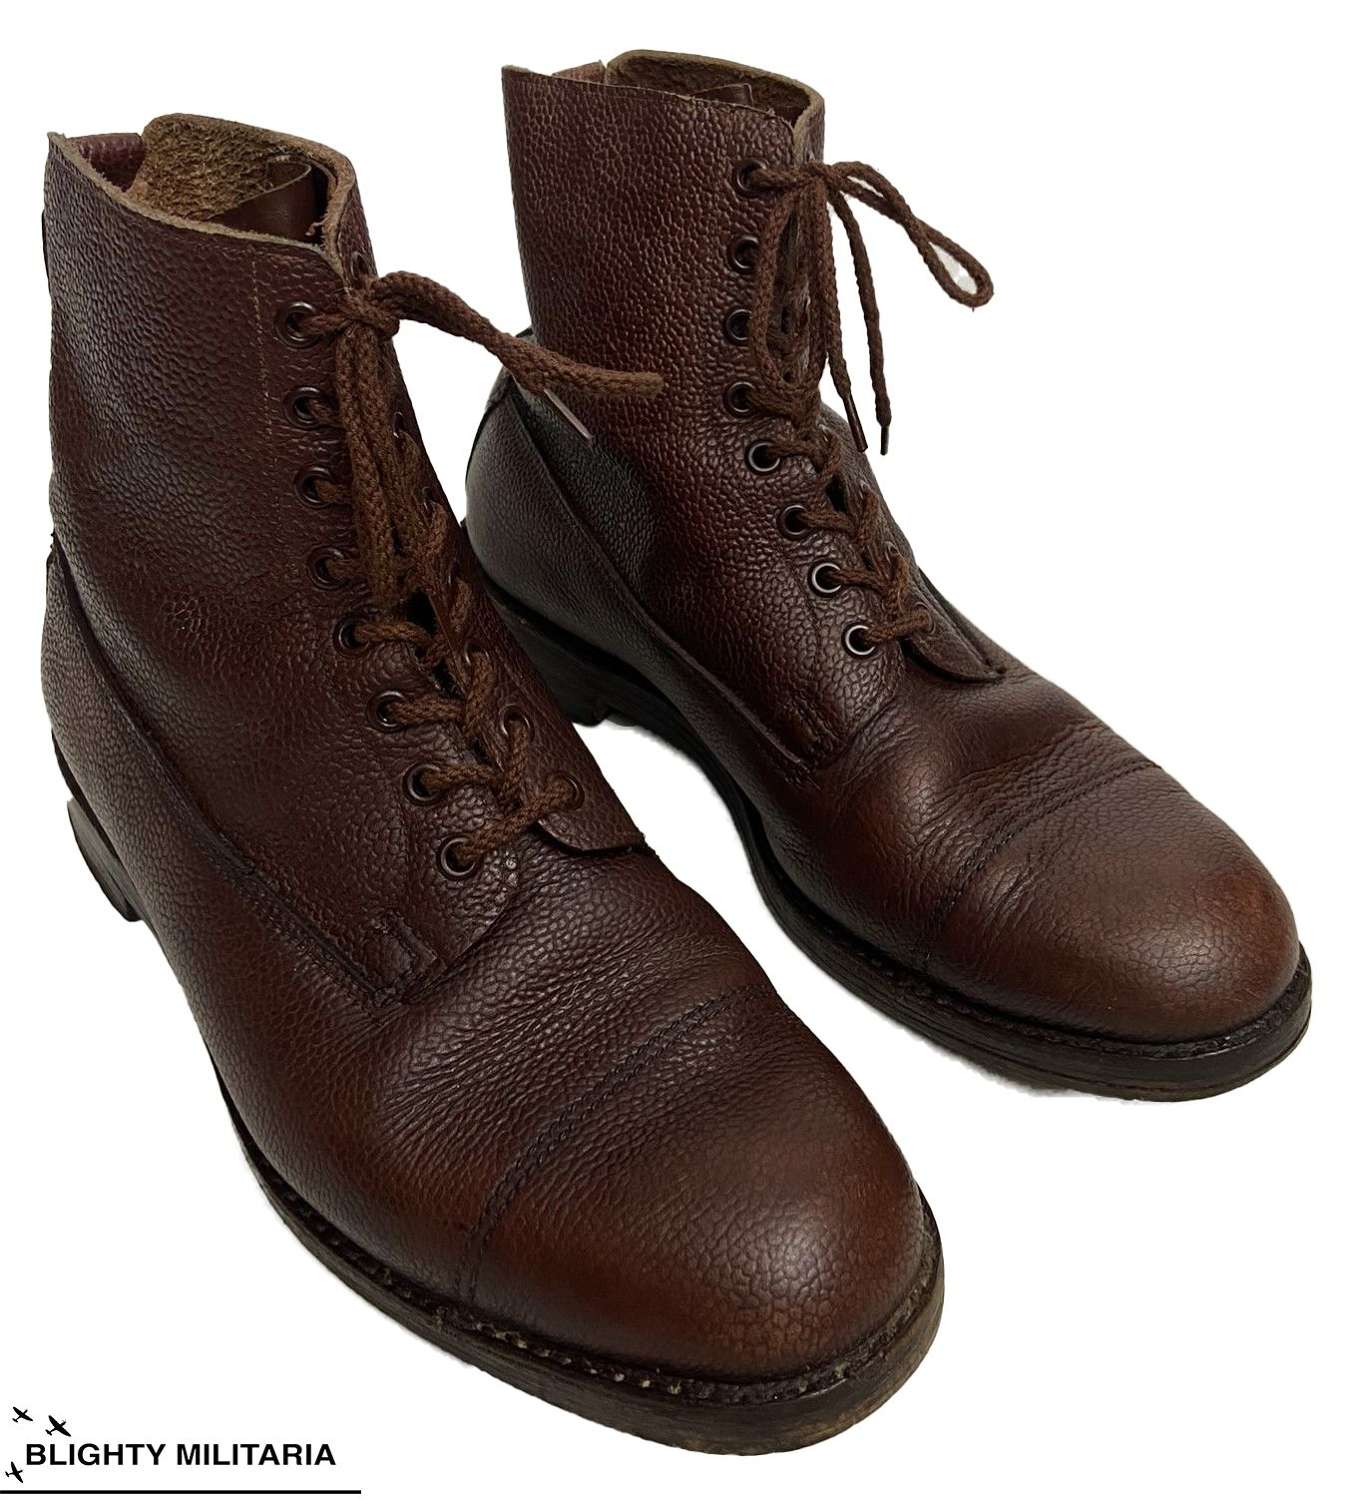 Original Vintage Men's Brown Leather VeldtSchoen Ankle Boots - Size 8